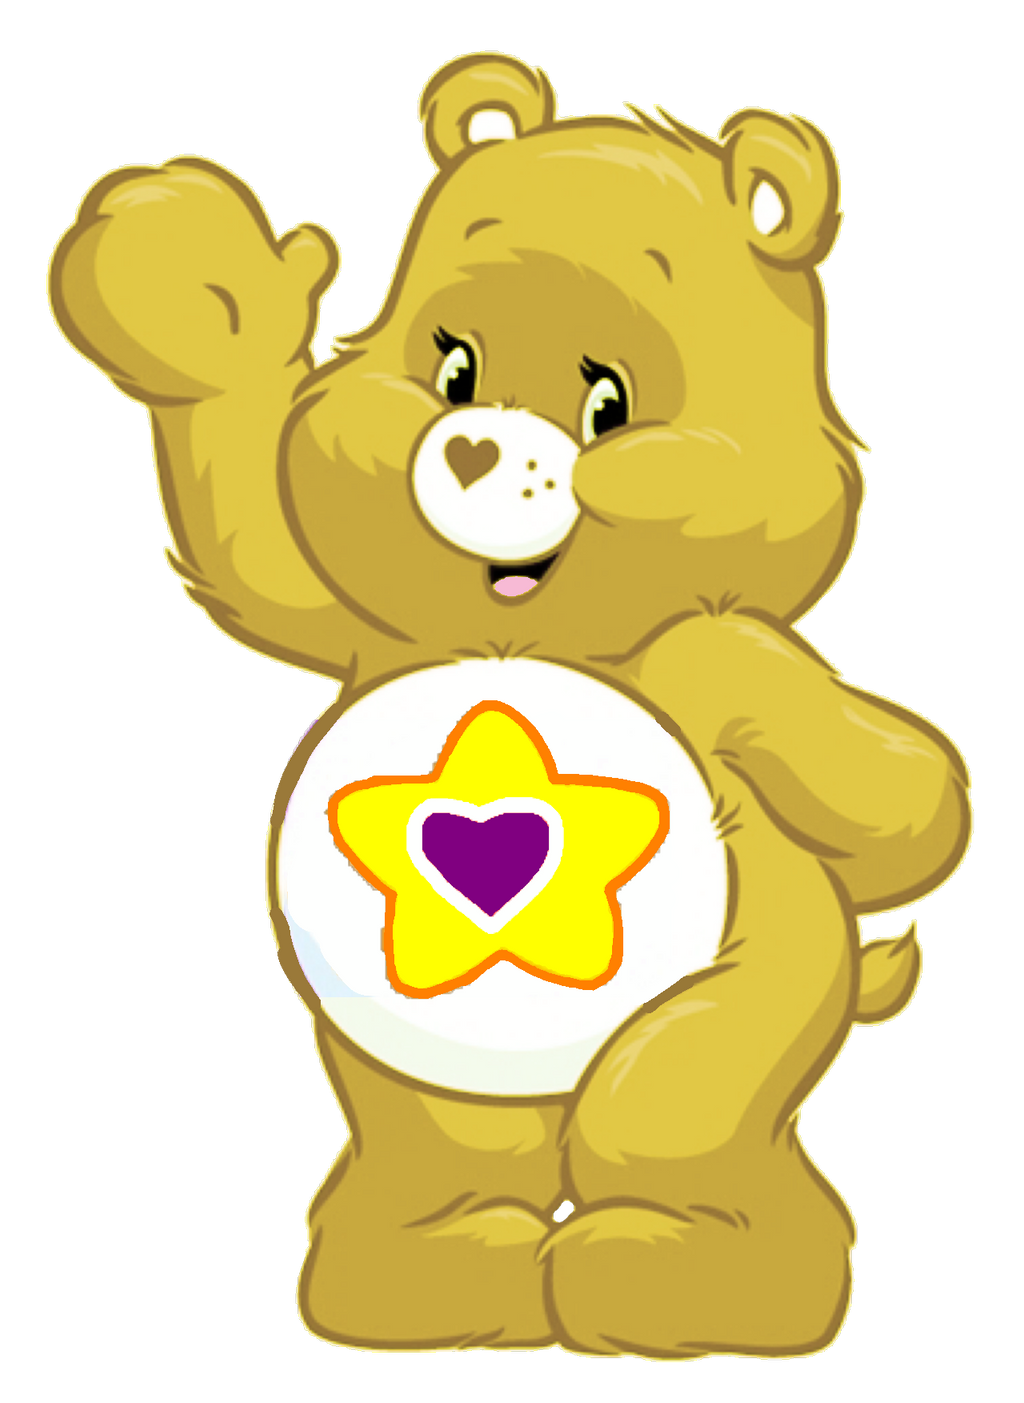 Care Bears: Star Bright Bear 2D by Joshuat1306 on DeviantArt